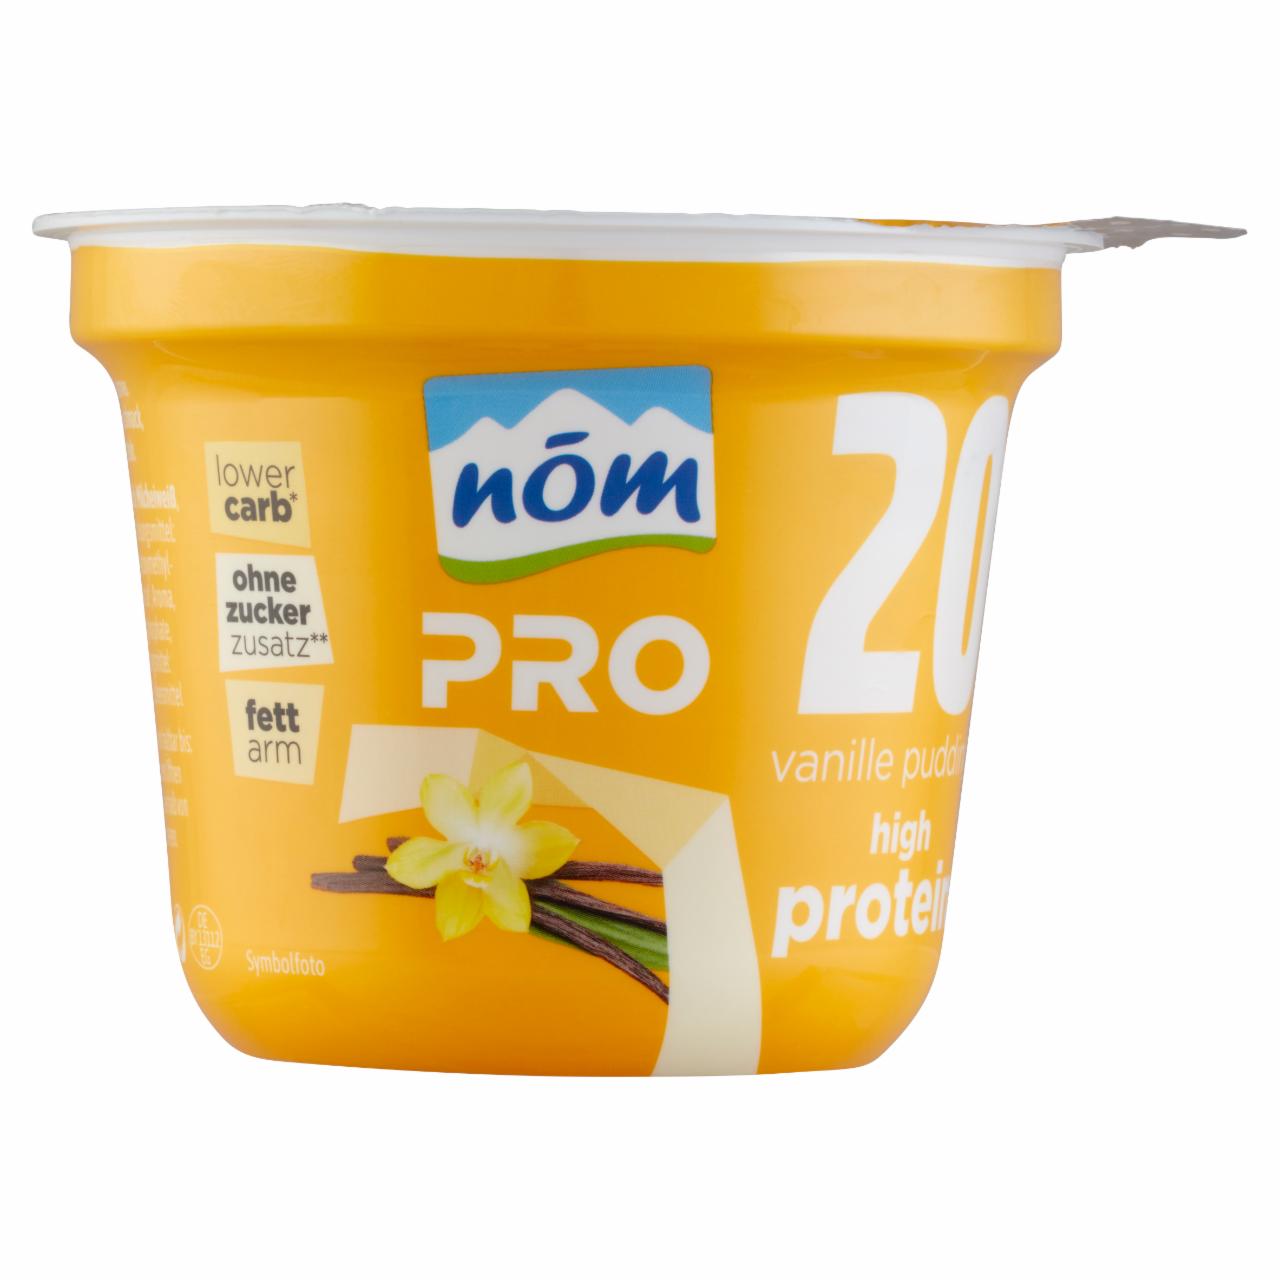 Fotografie - Pro 20 vanille pudding high protein Nóm